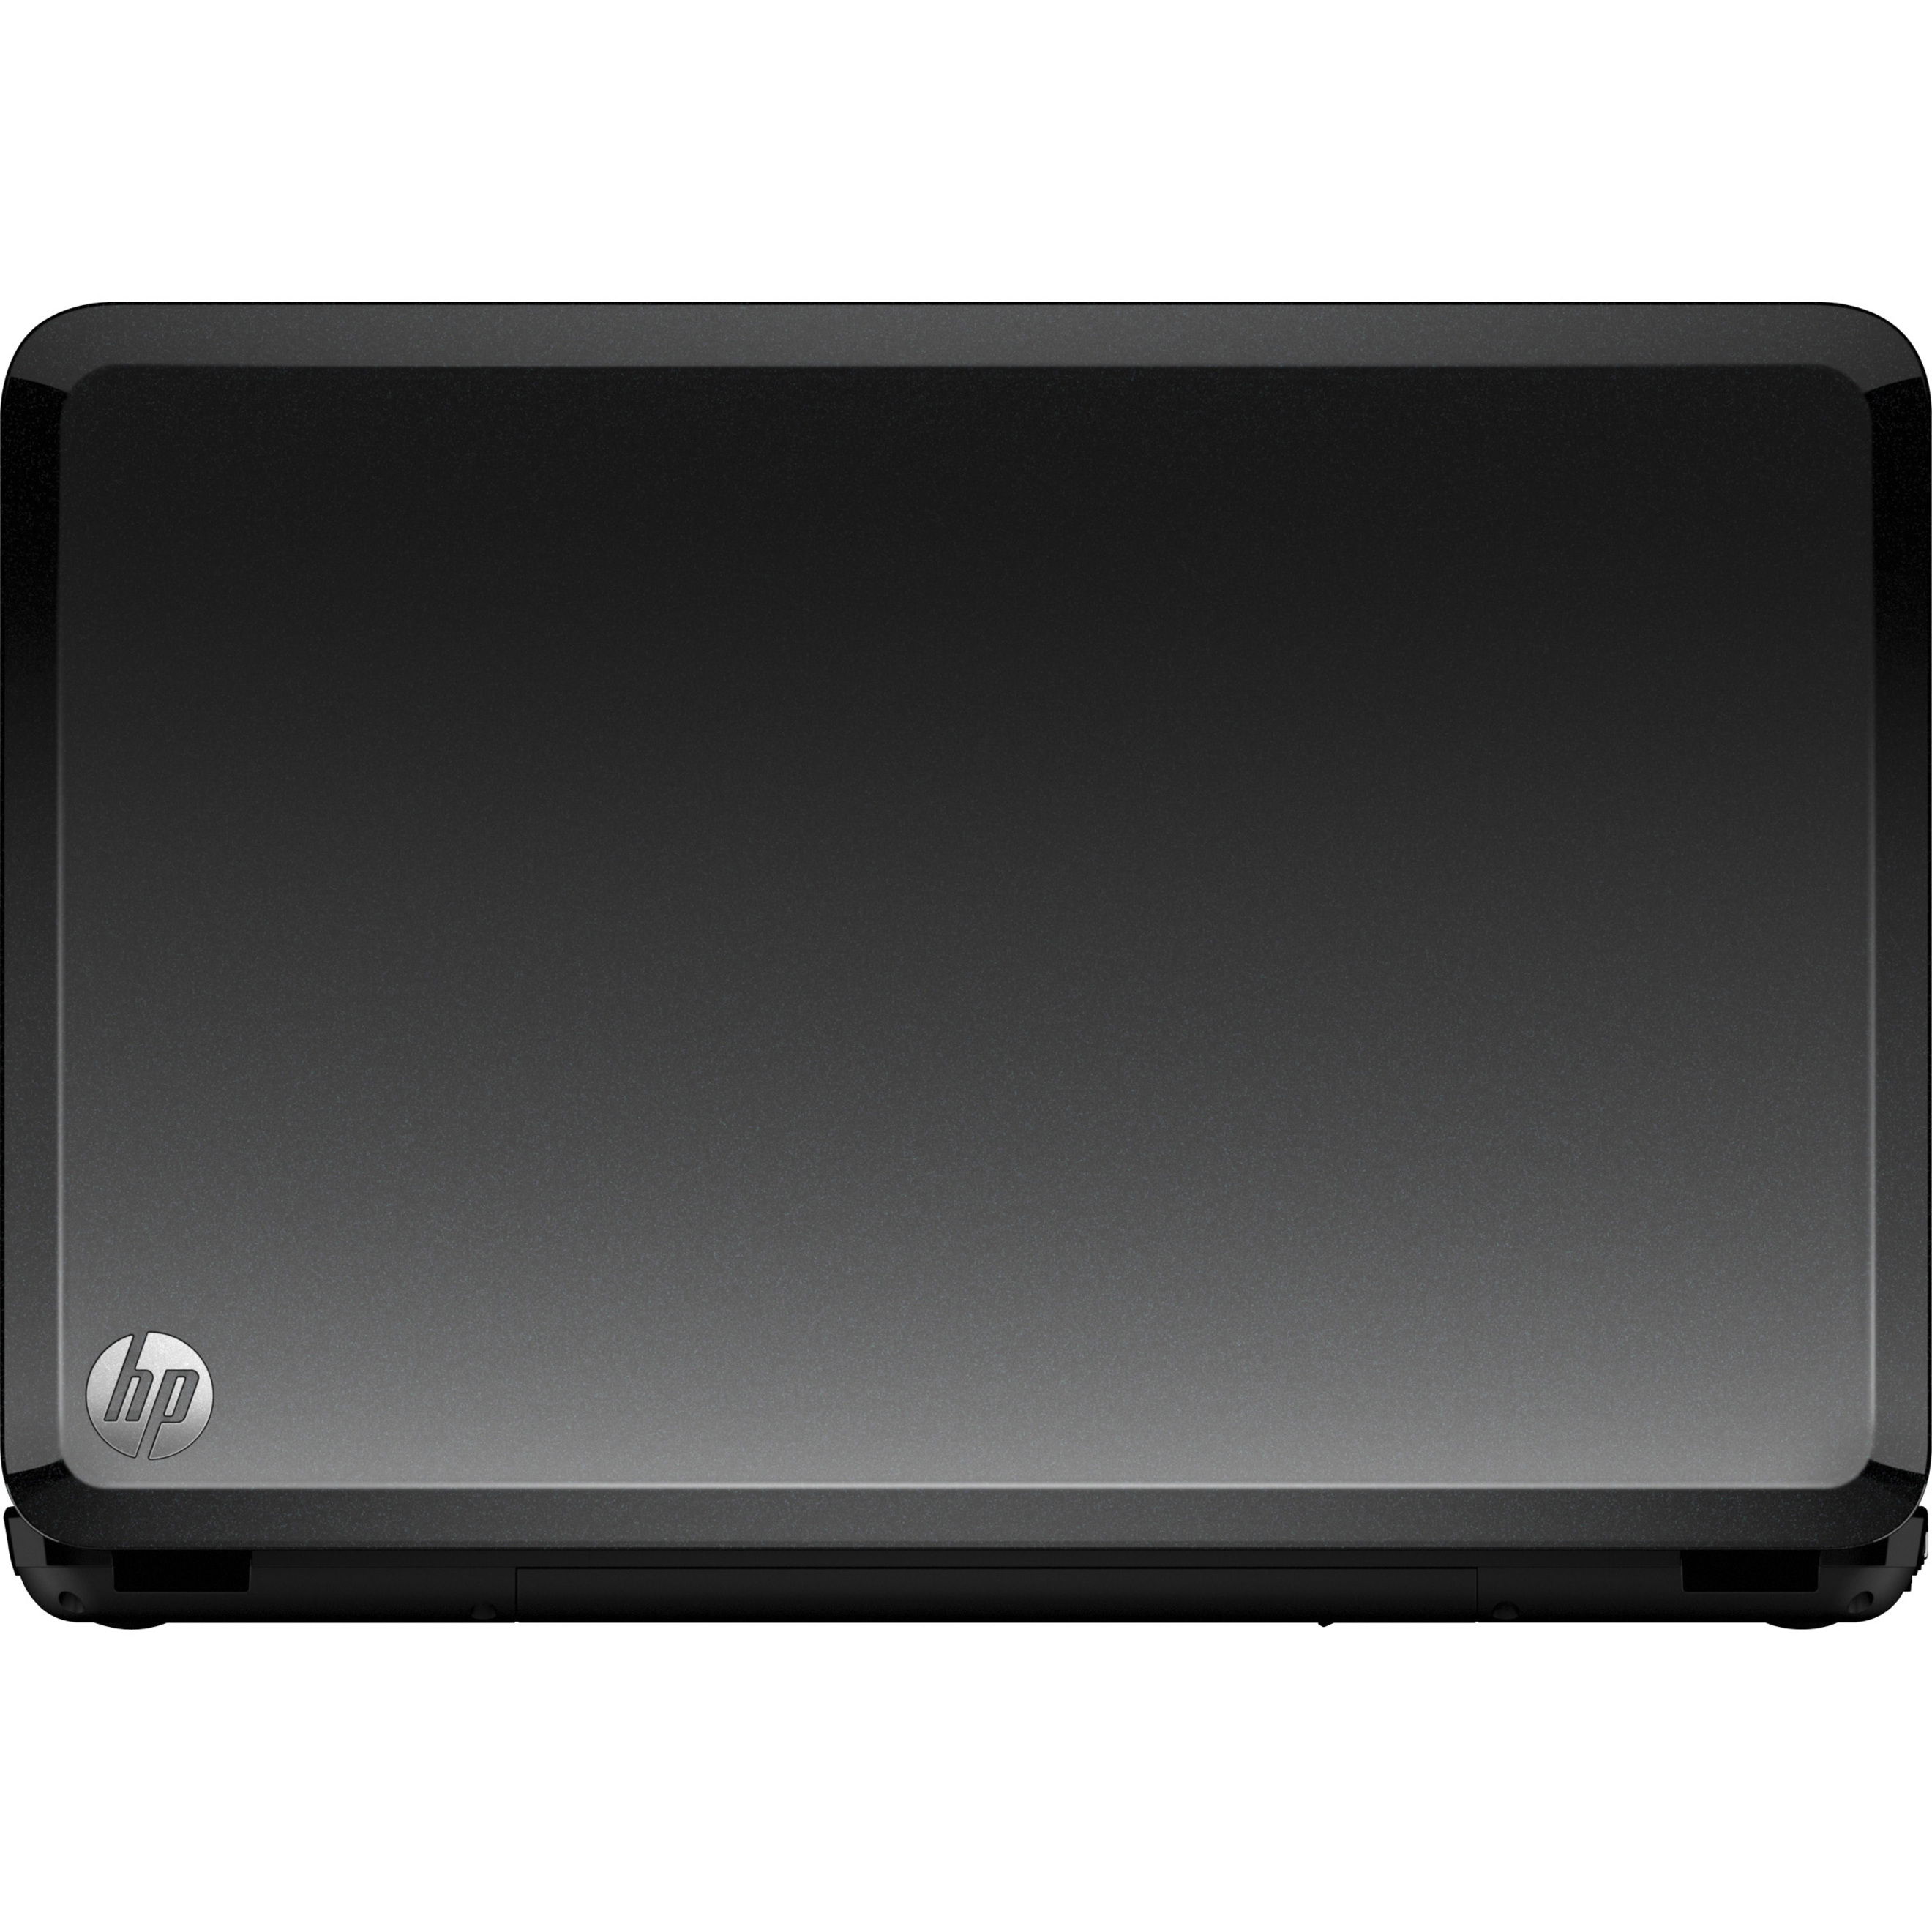 HP Pavilion 17.3" Laptop, AMD A-Series A8-4500M, 500GB HD, DVD Writer, Windows 8, g7-2269wm - image 5 of 6